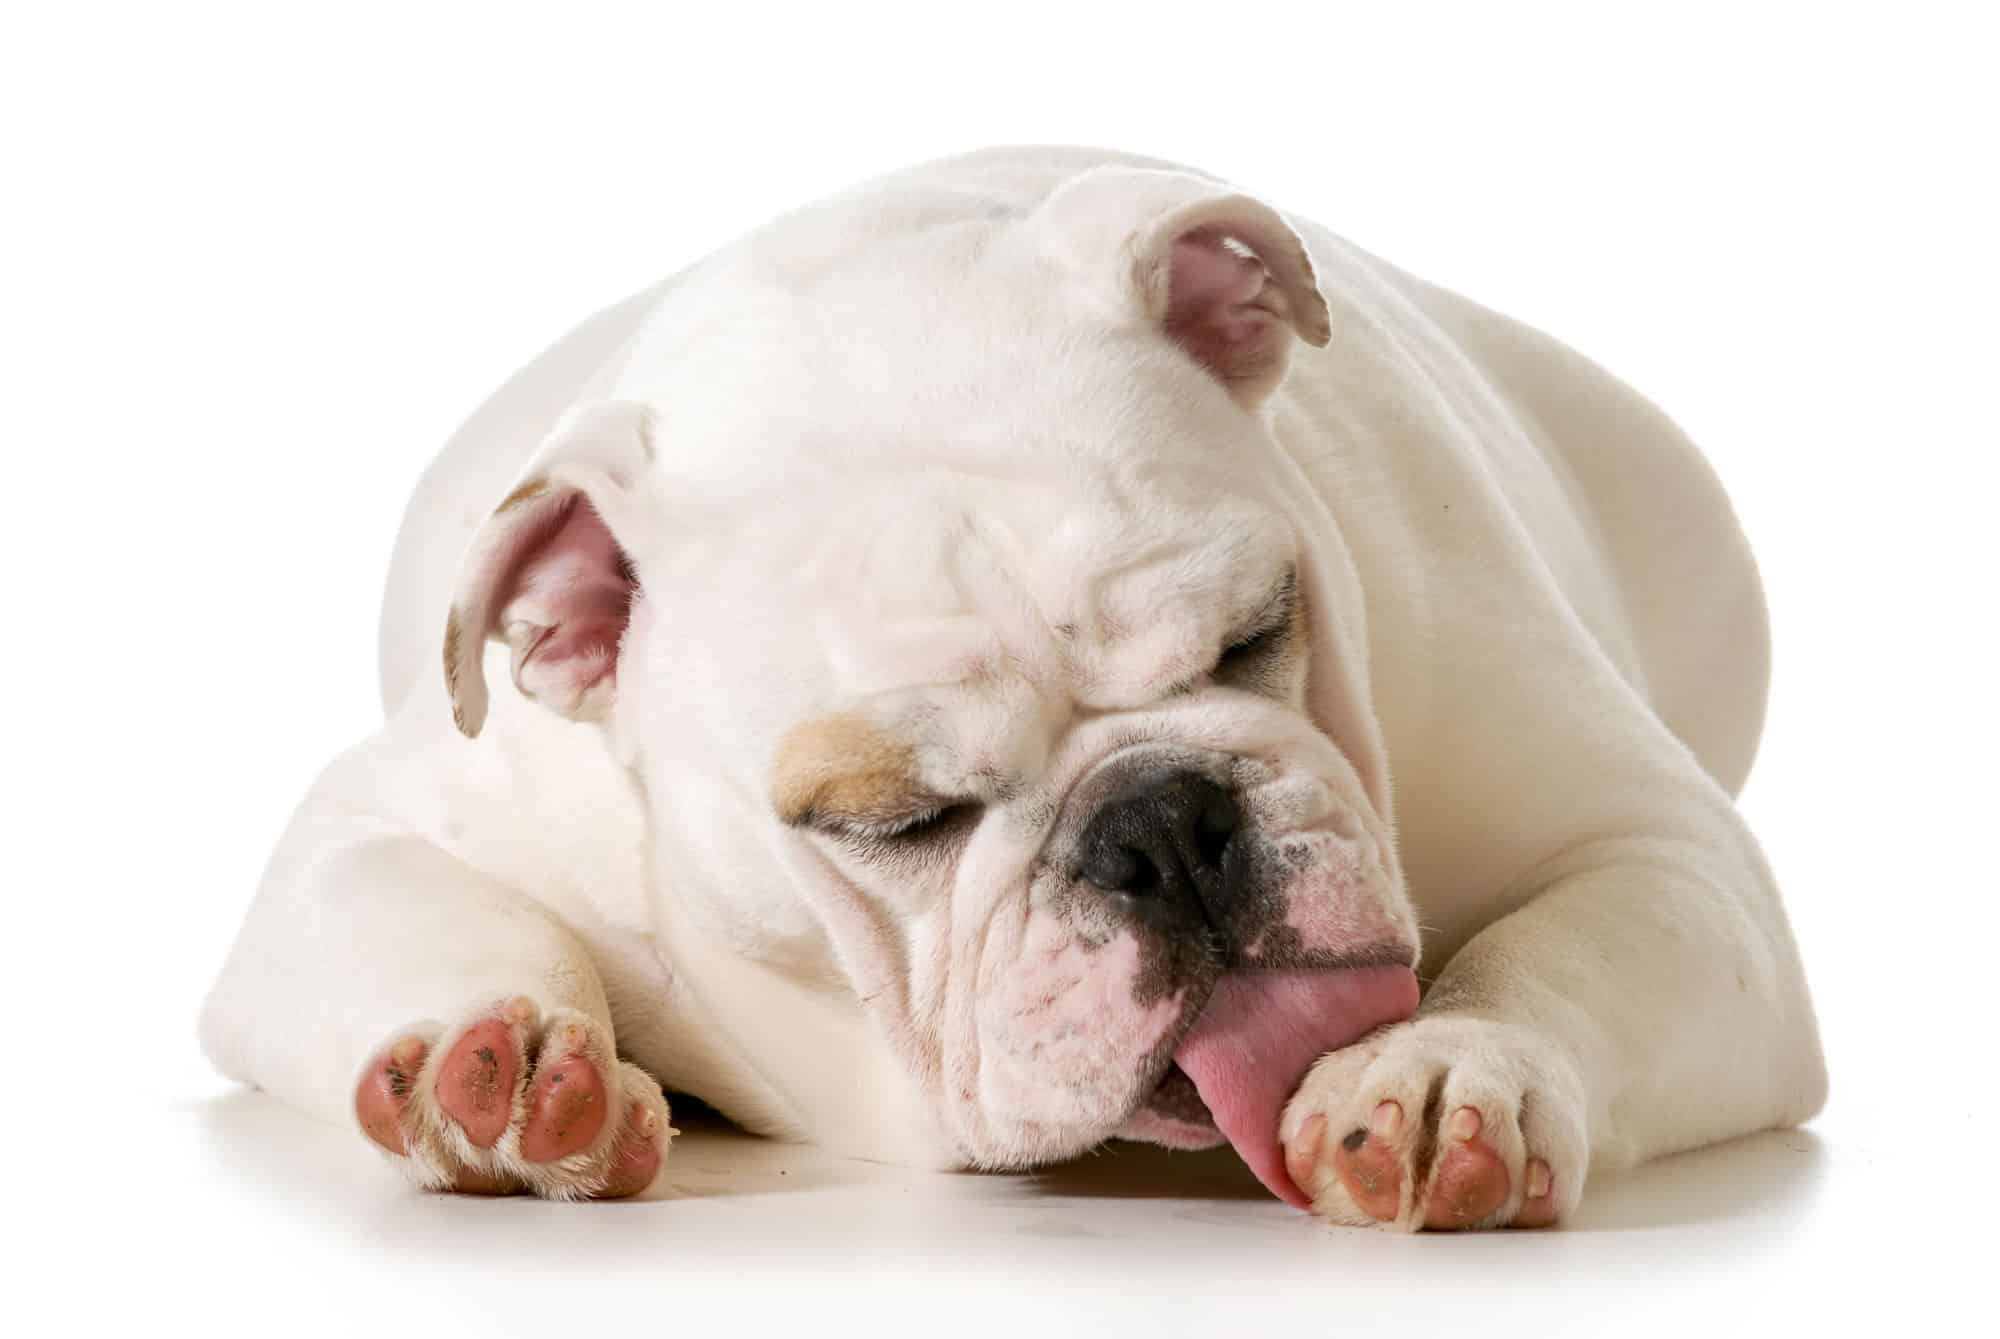 Hydrogen Peroxide For Dog Hot Spots -Treatment Options- Banixx